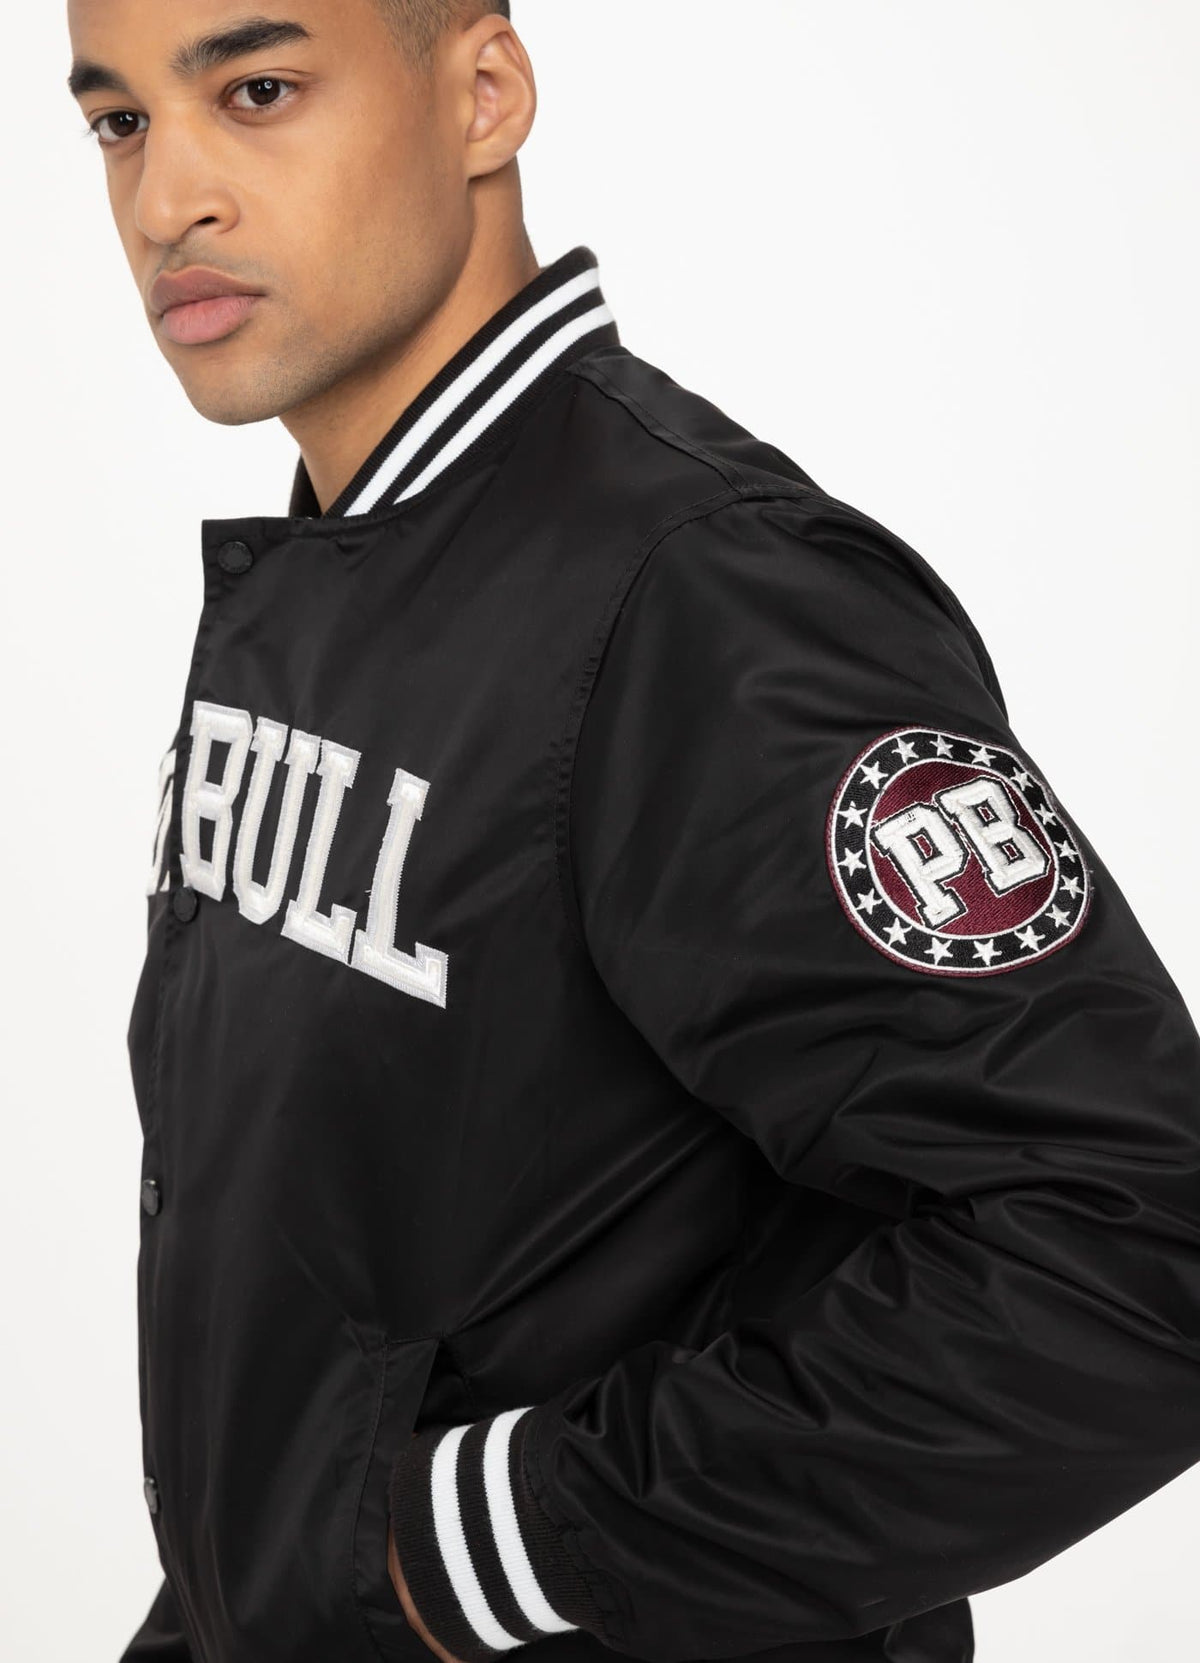 Jacket TYRIAN Black - Pitbull West Coast International Store 